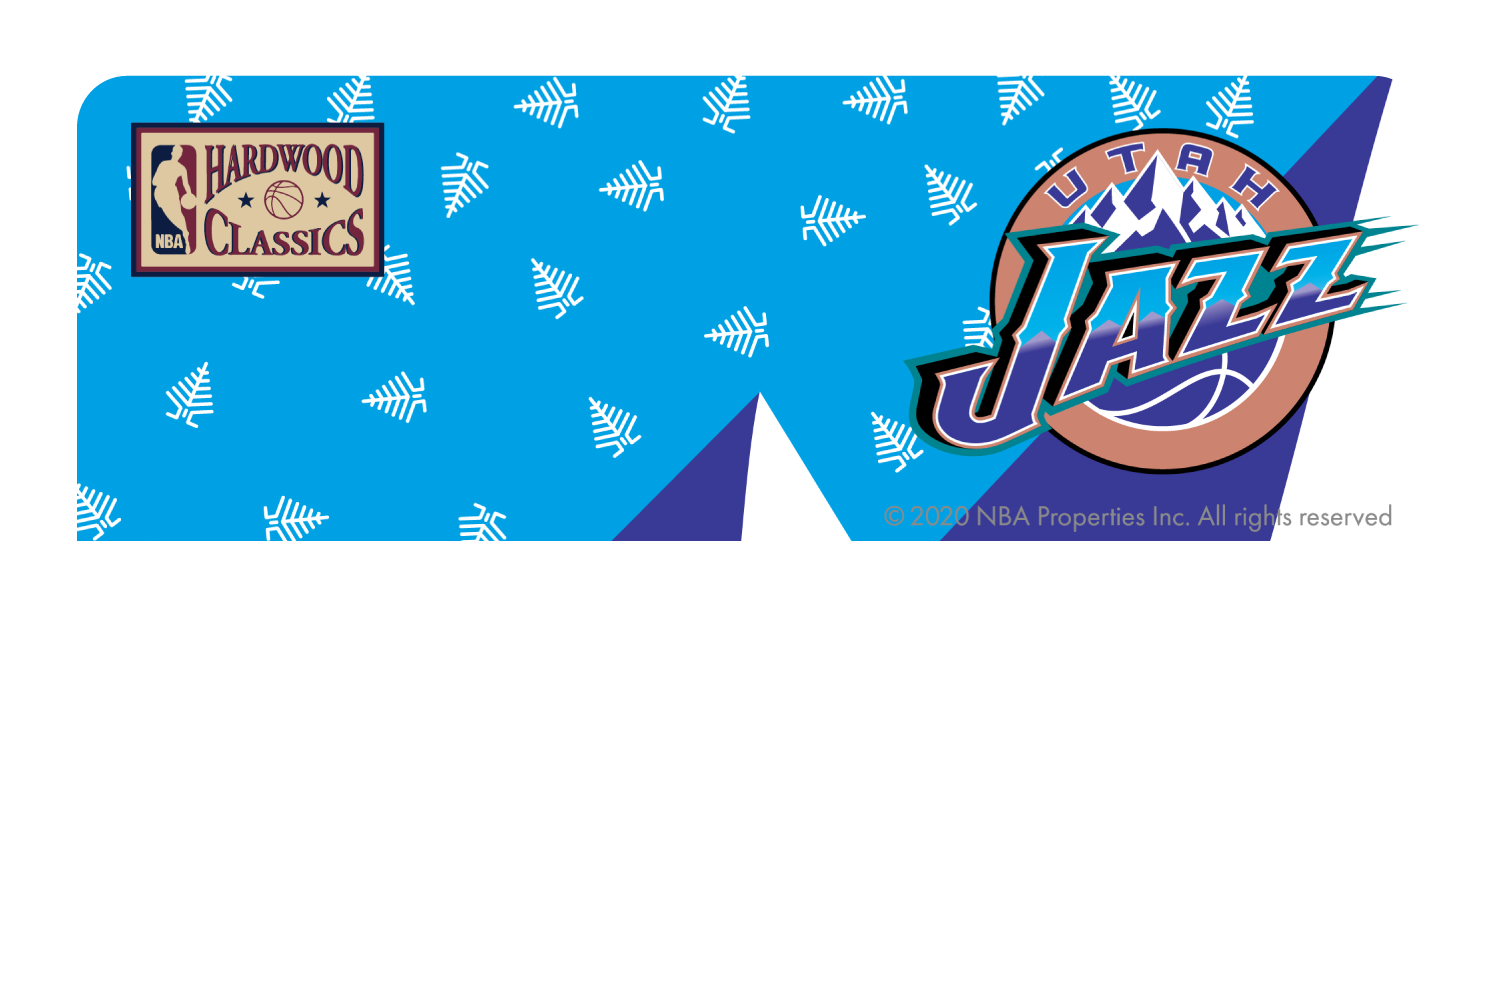 Utah Jazz: Uptempo Hardwood Classics